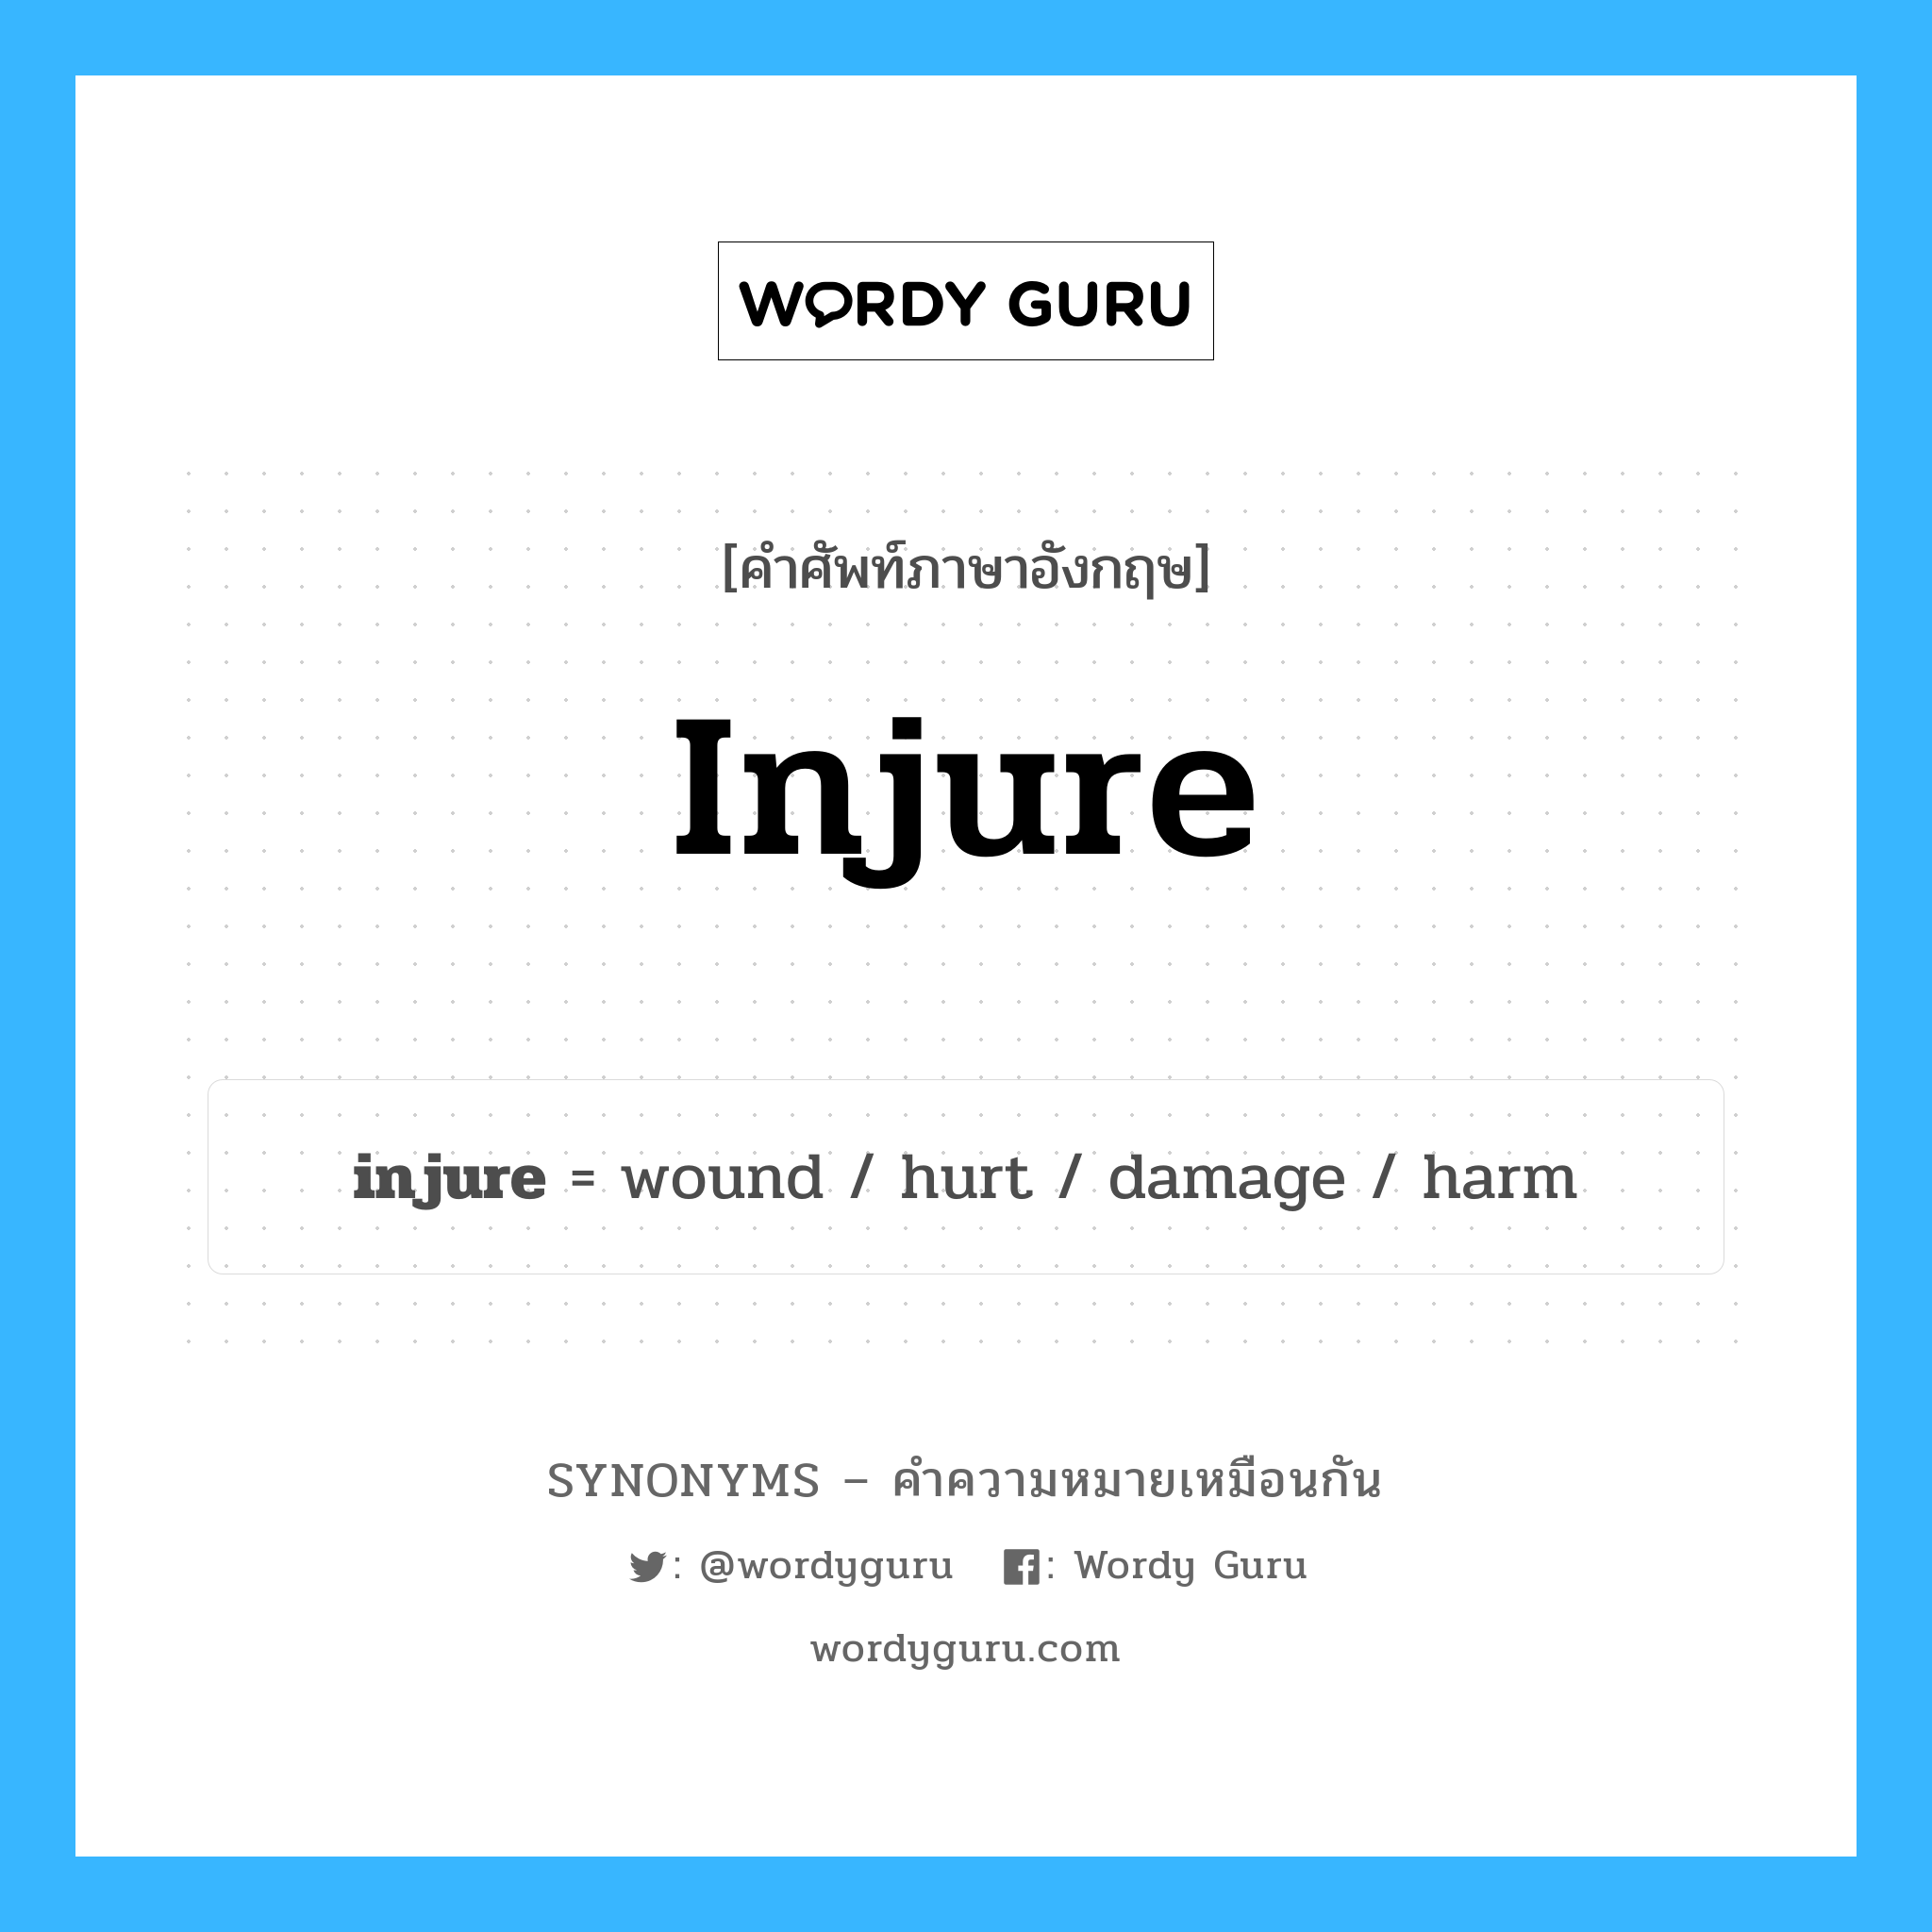 harm เป็นหนึ่งใน injure และมีคำอื่น ๆ อีกดังนี้, คำศัพท์ภาษาอังกฤษ harm ความหมายคล้ายกันกับ injure แปลว่า เป็นอันตรายต่อ หมวด injure